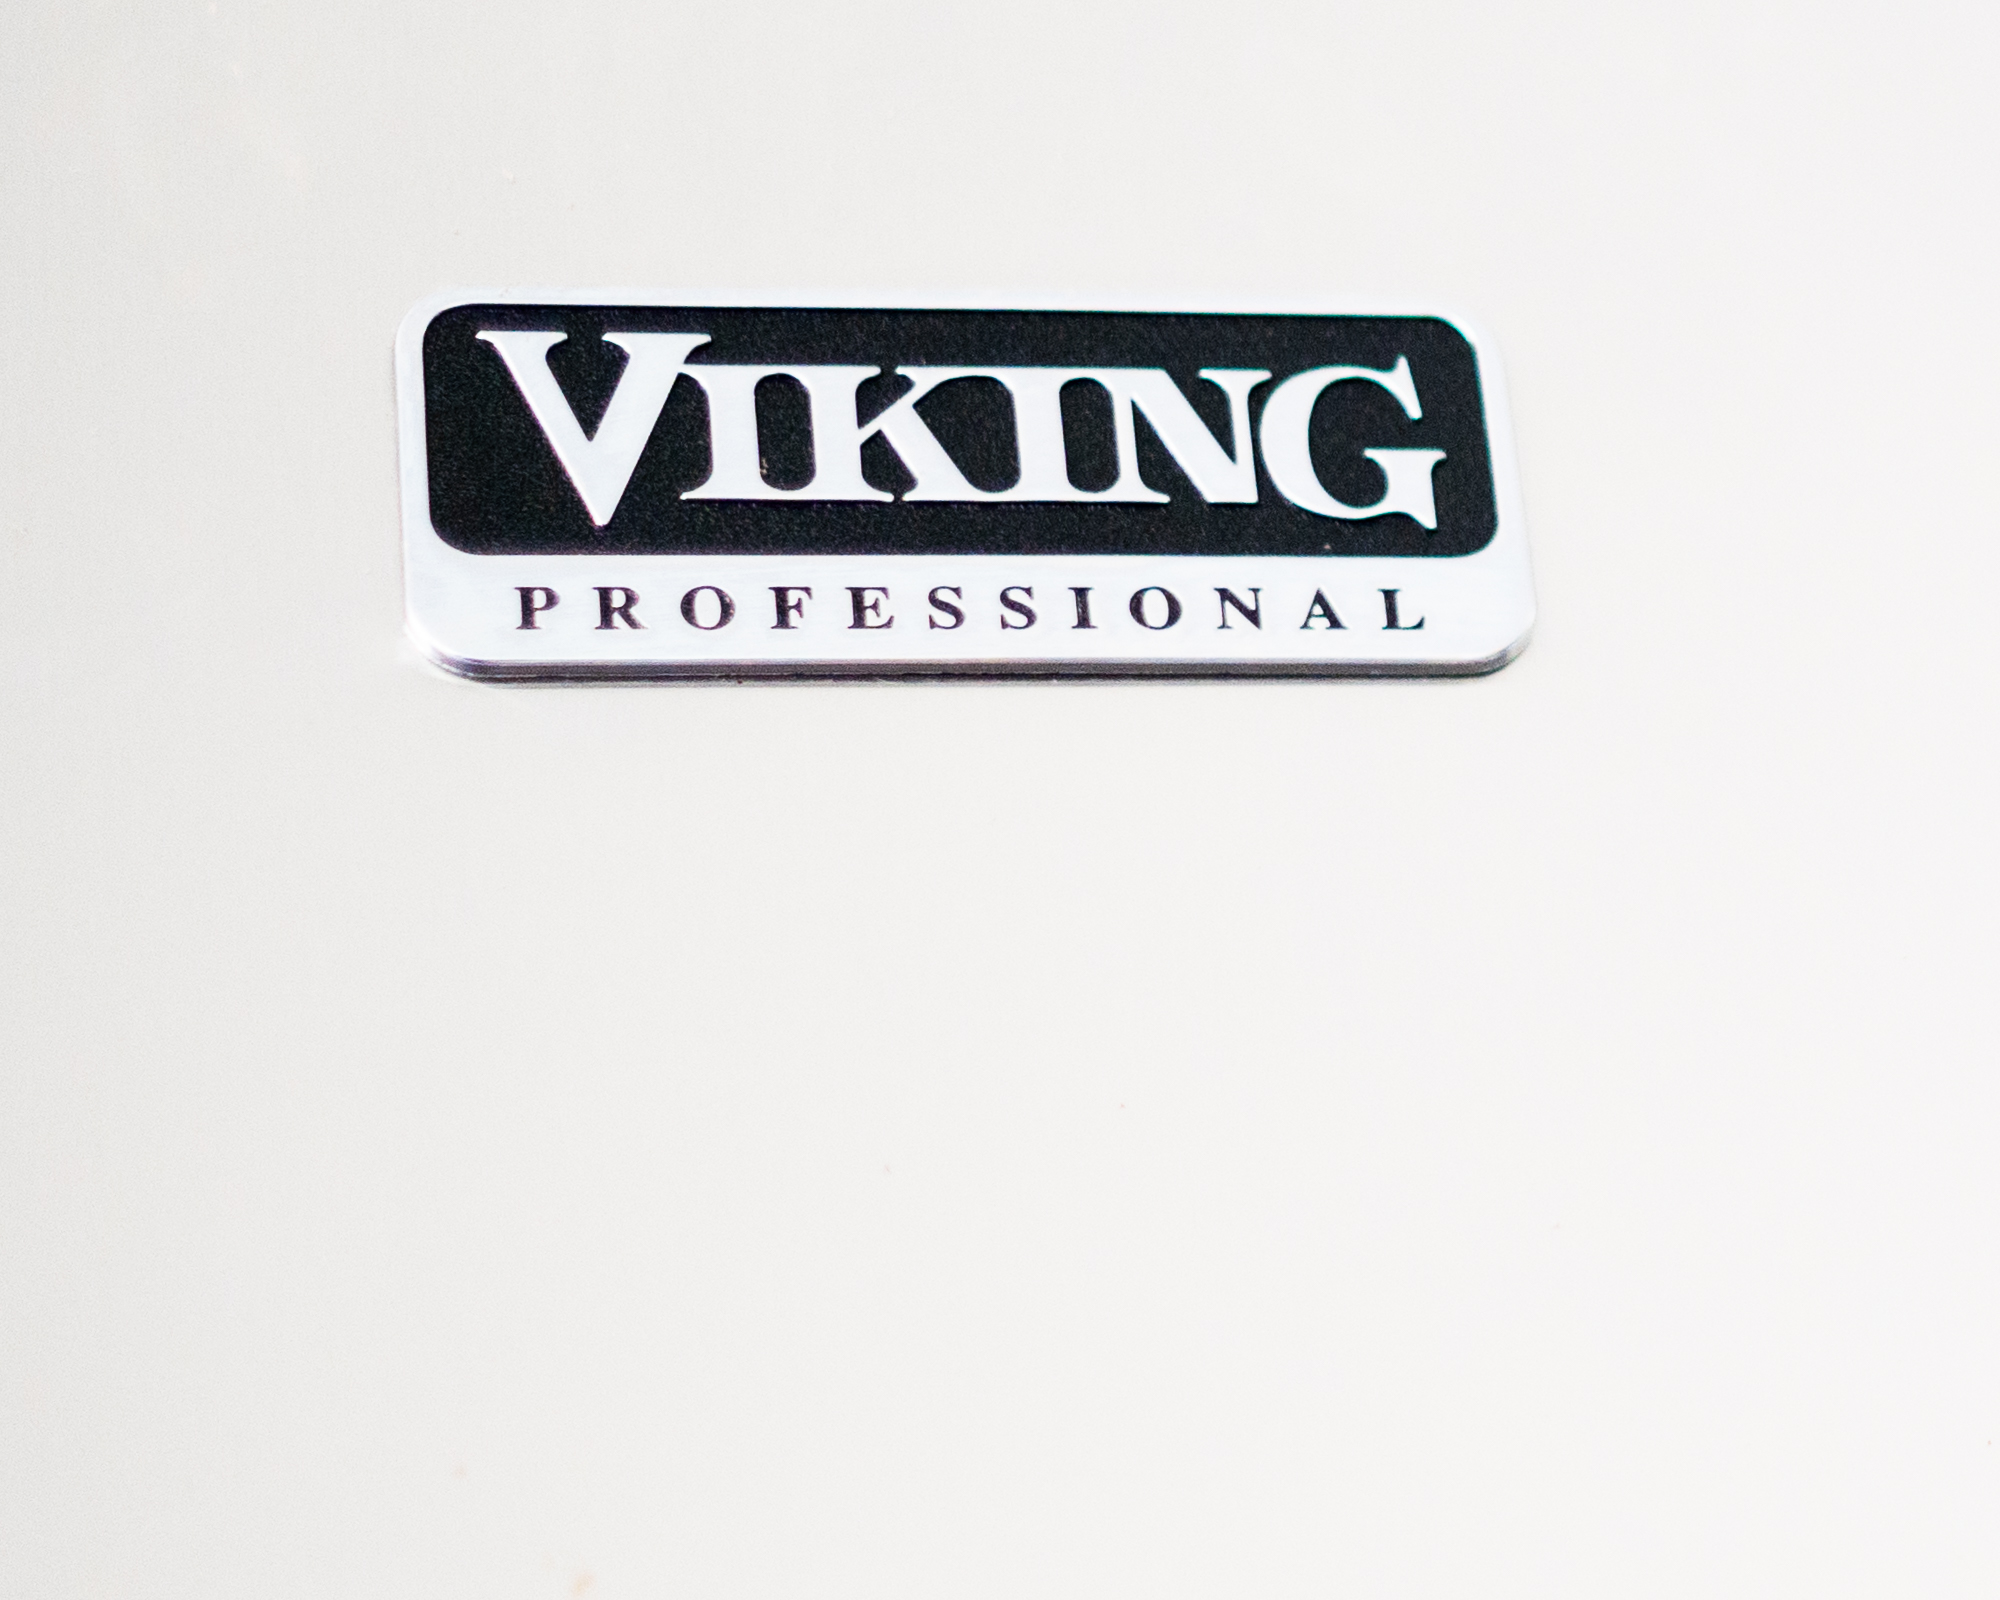 Viking Professional Refrigerator